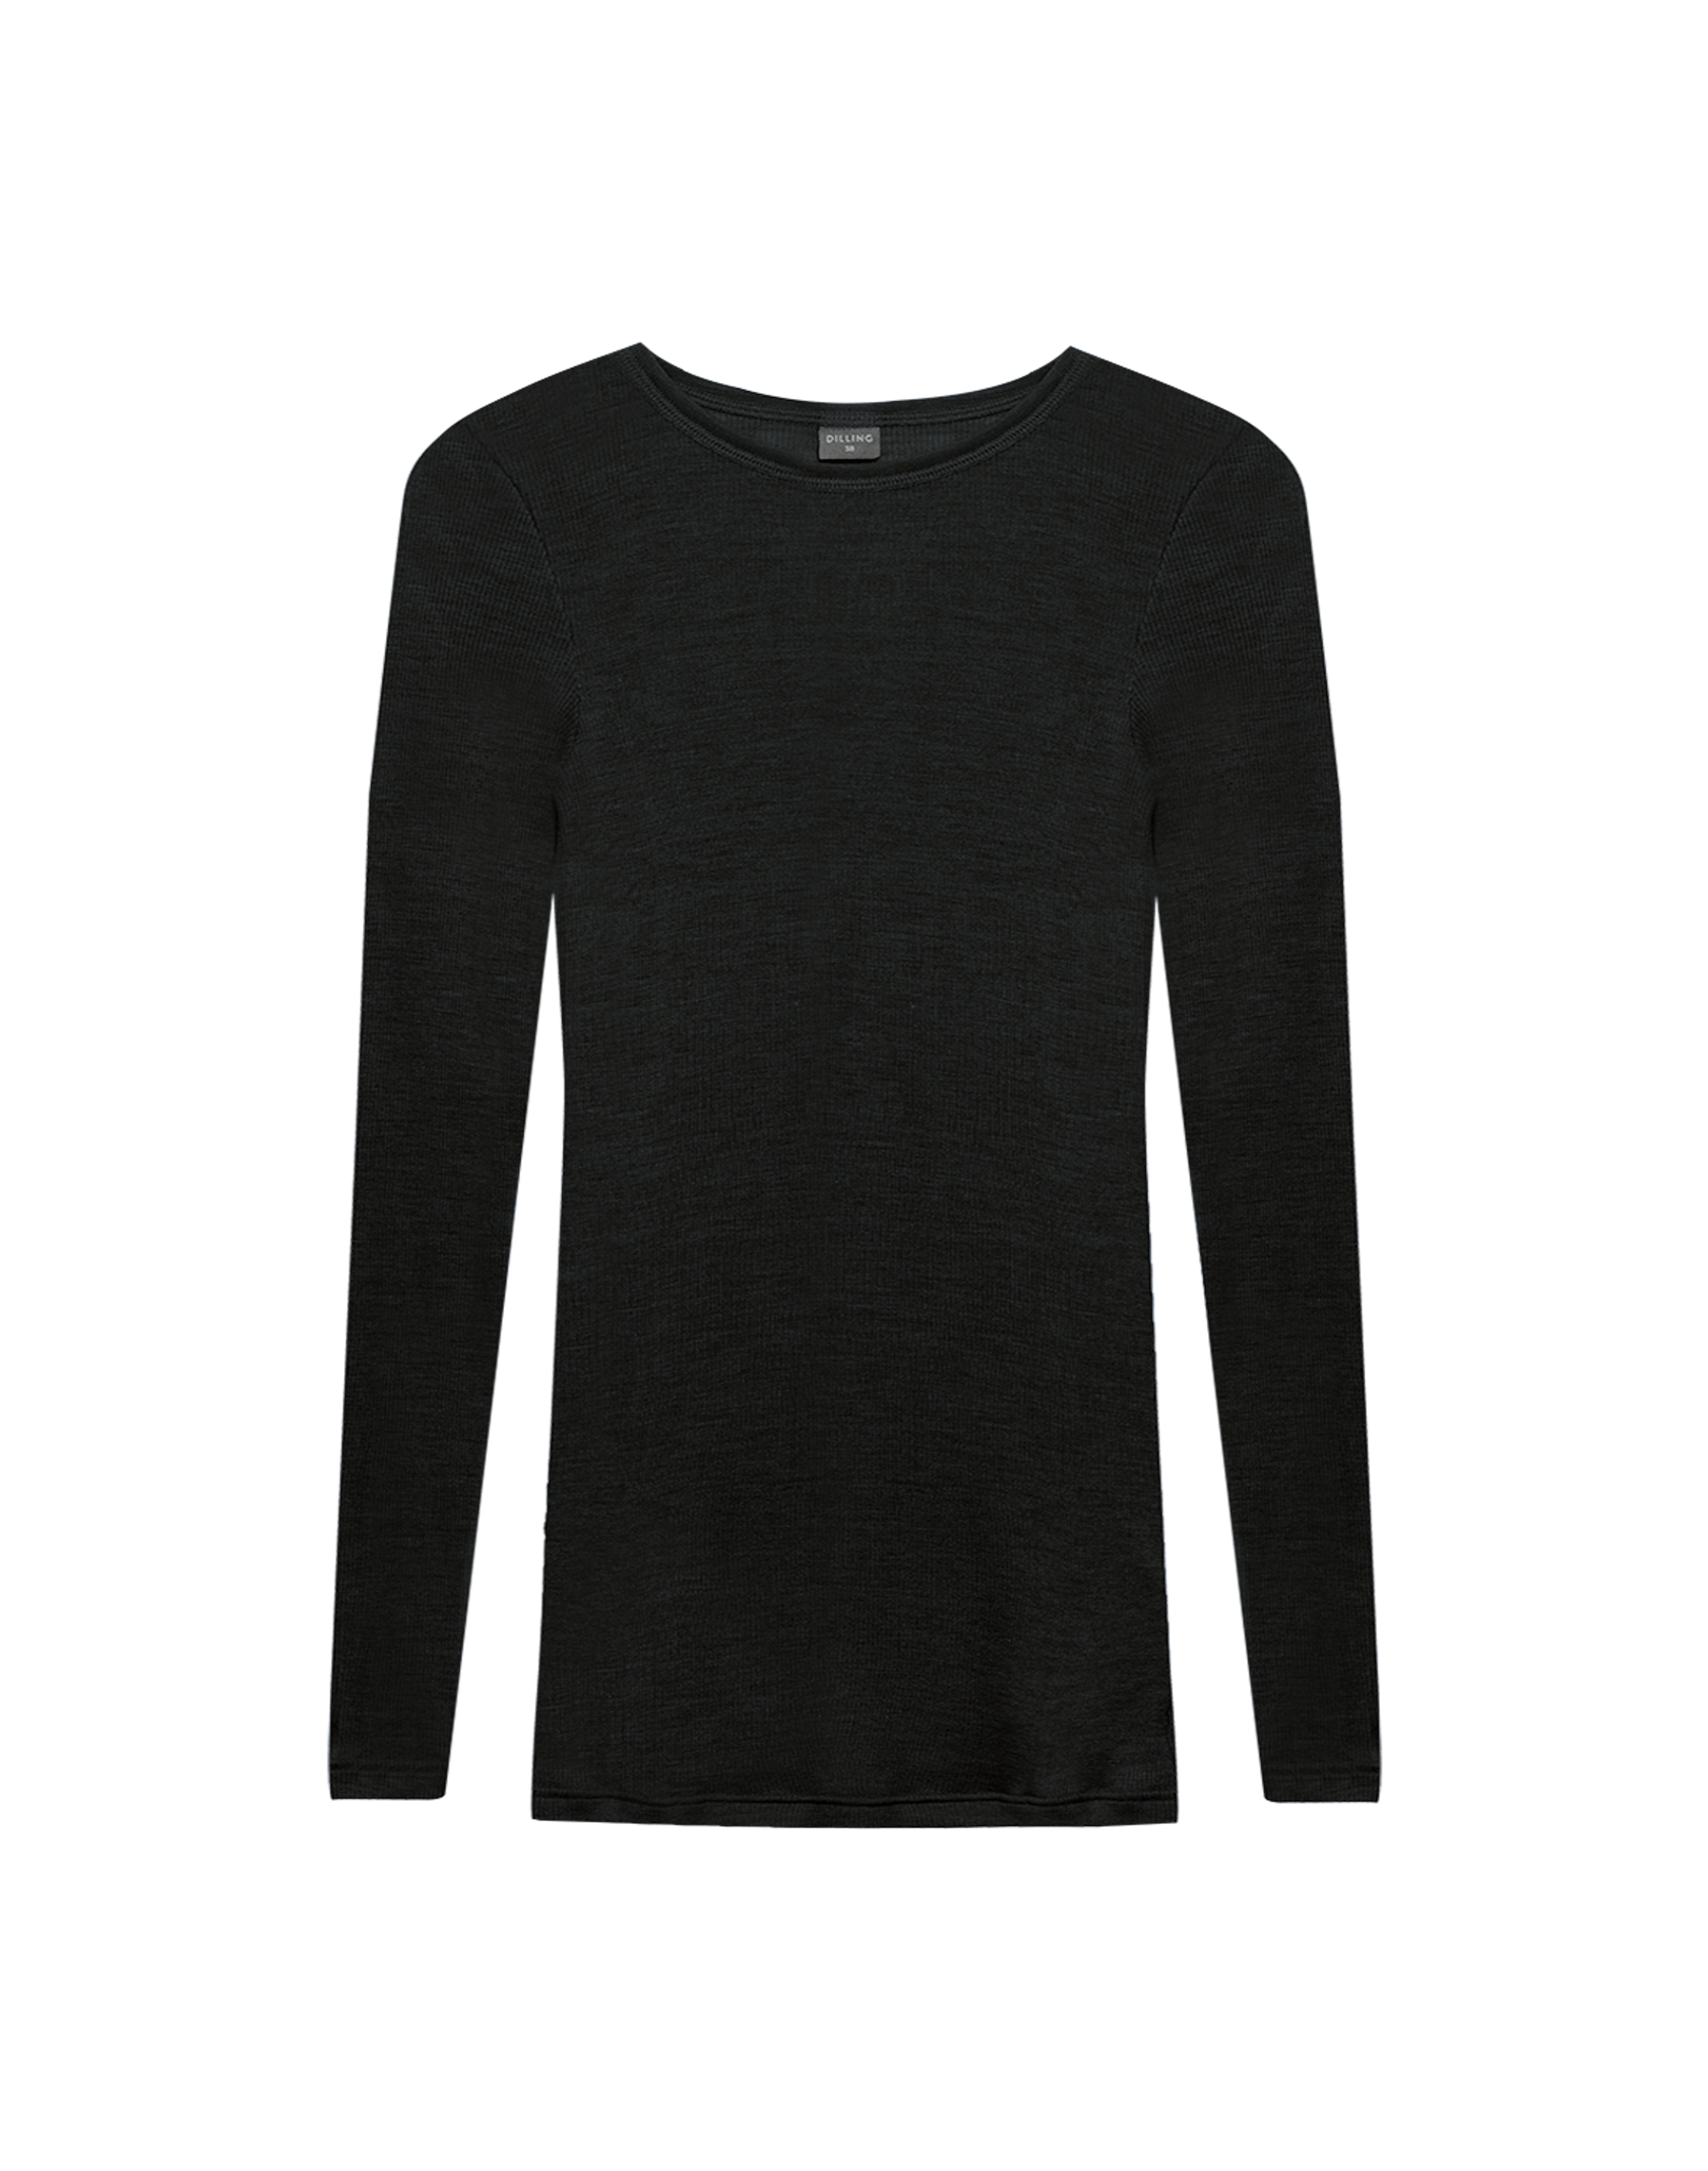 Women’s merino wool/silk long sleeve top